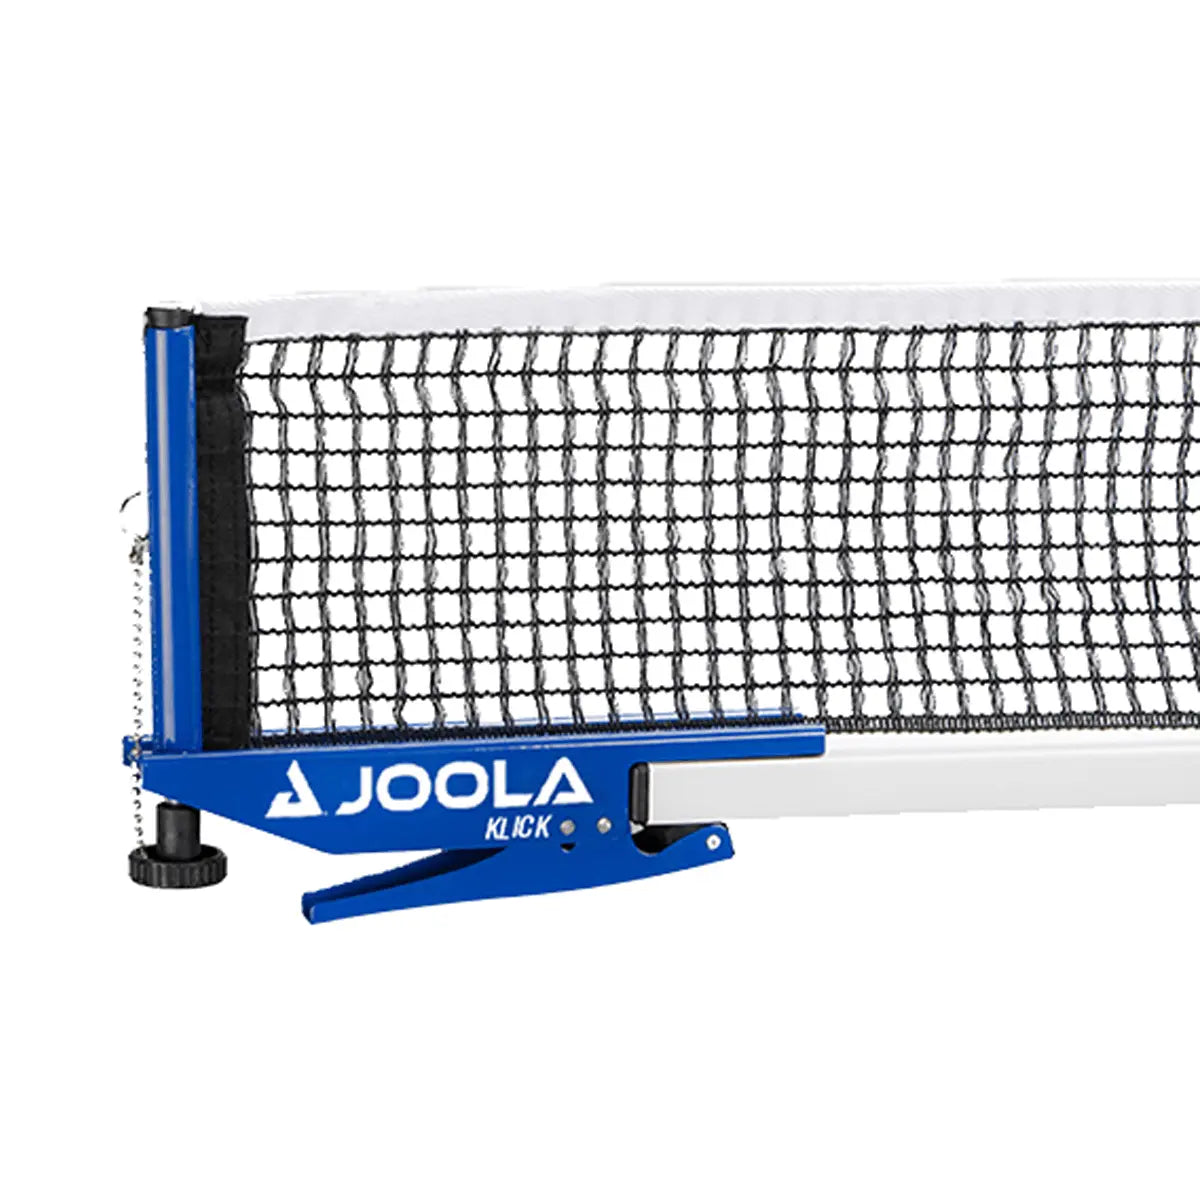 Joola Klick Table Tennis Net and Post Set-The Racquet Shop-Shop Online in UAE, Saudi Arabia, Kuwait, Oman, Bahrain and Qatar